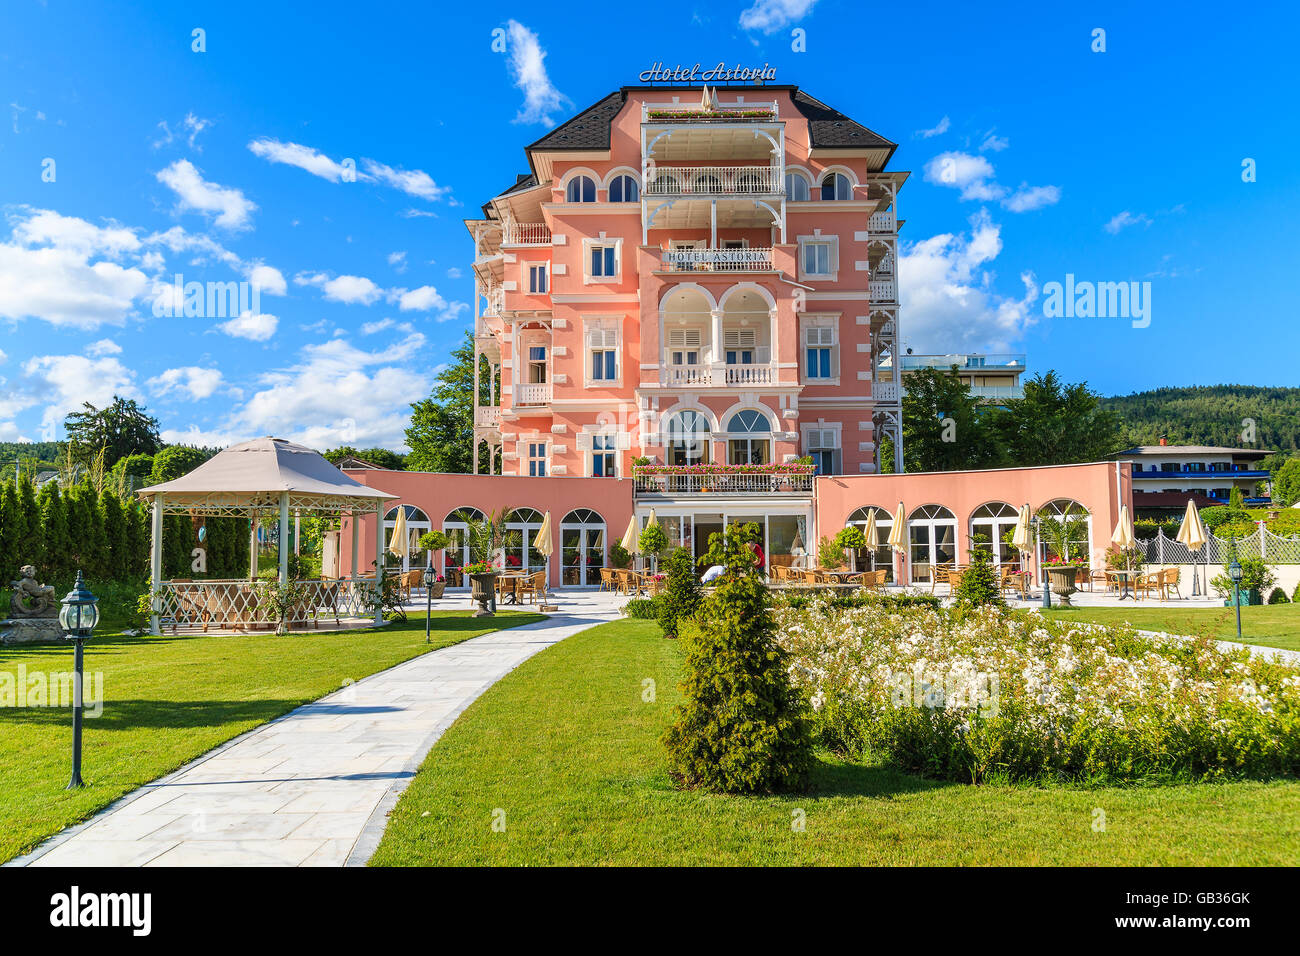 WORTHERSEE LAKE, AUSTRIA - JUN 20, 2015: luxury hotel Astoria and its gardens on shore of beautiful alpine lake Worthersee in su Stock Photo